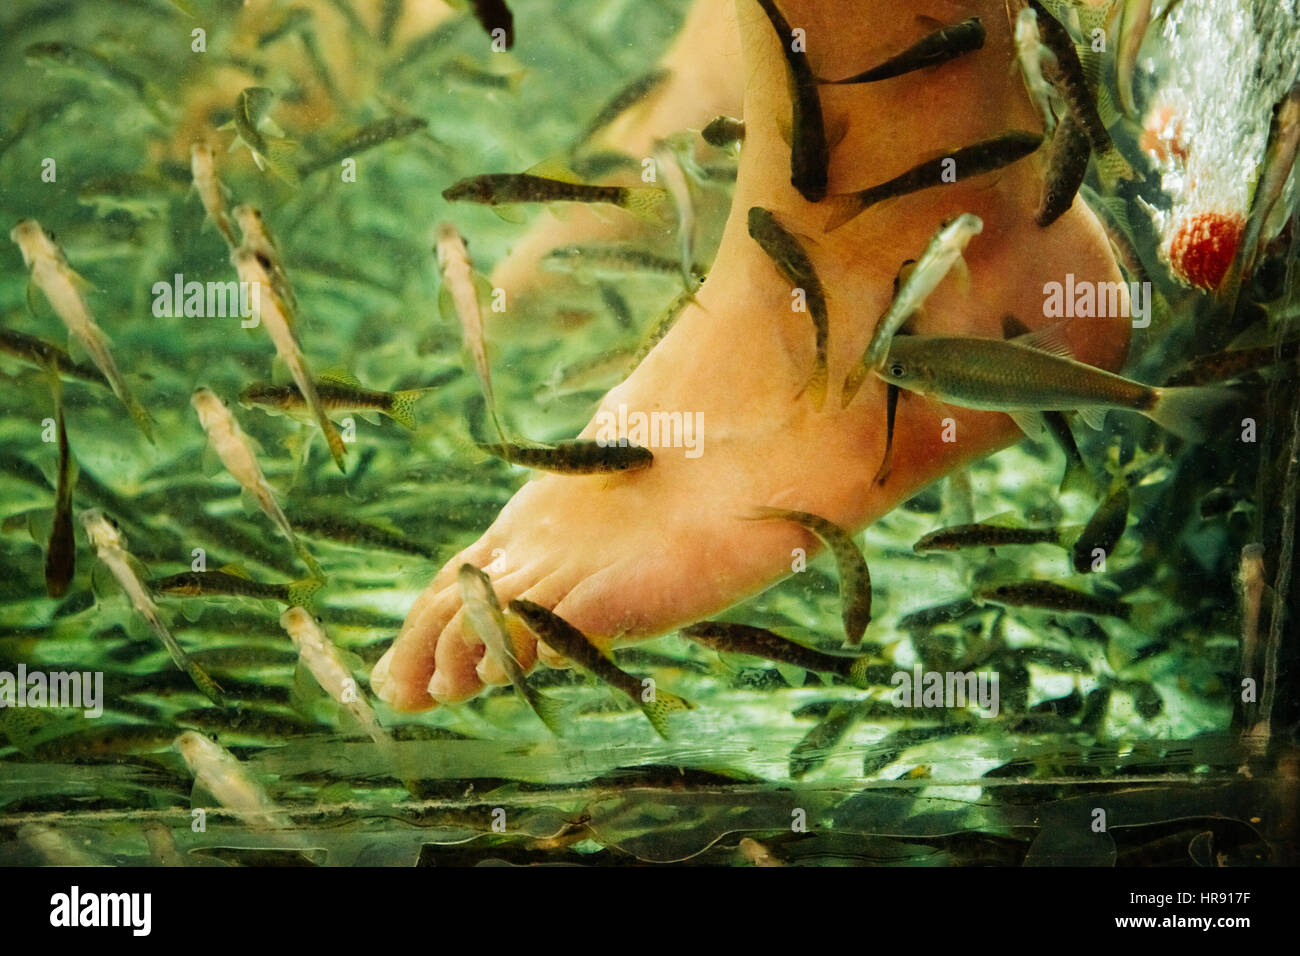 Exotic foot massage in aquarium by fish Stock Photo